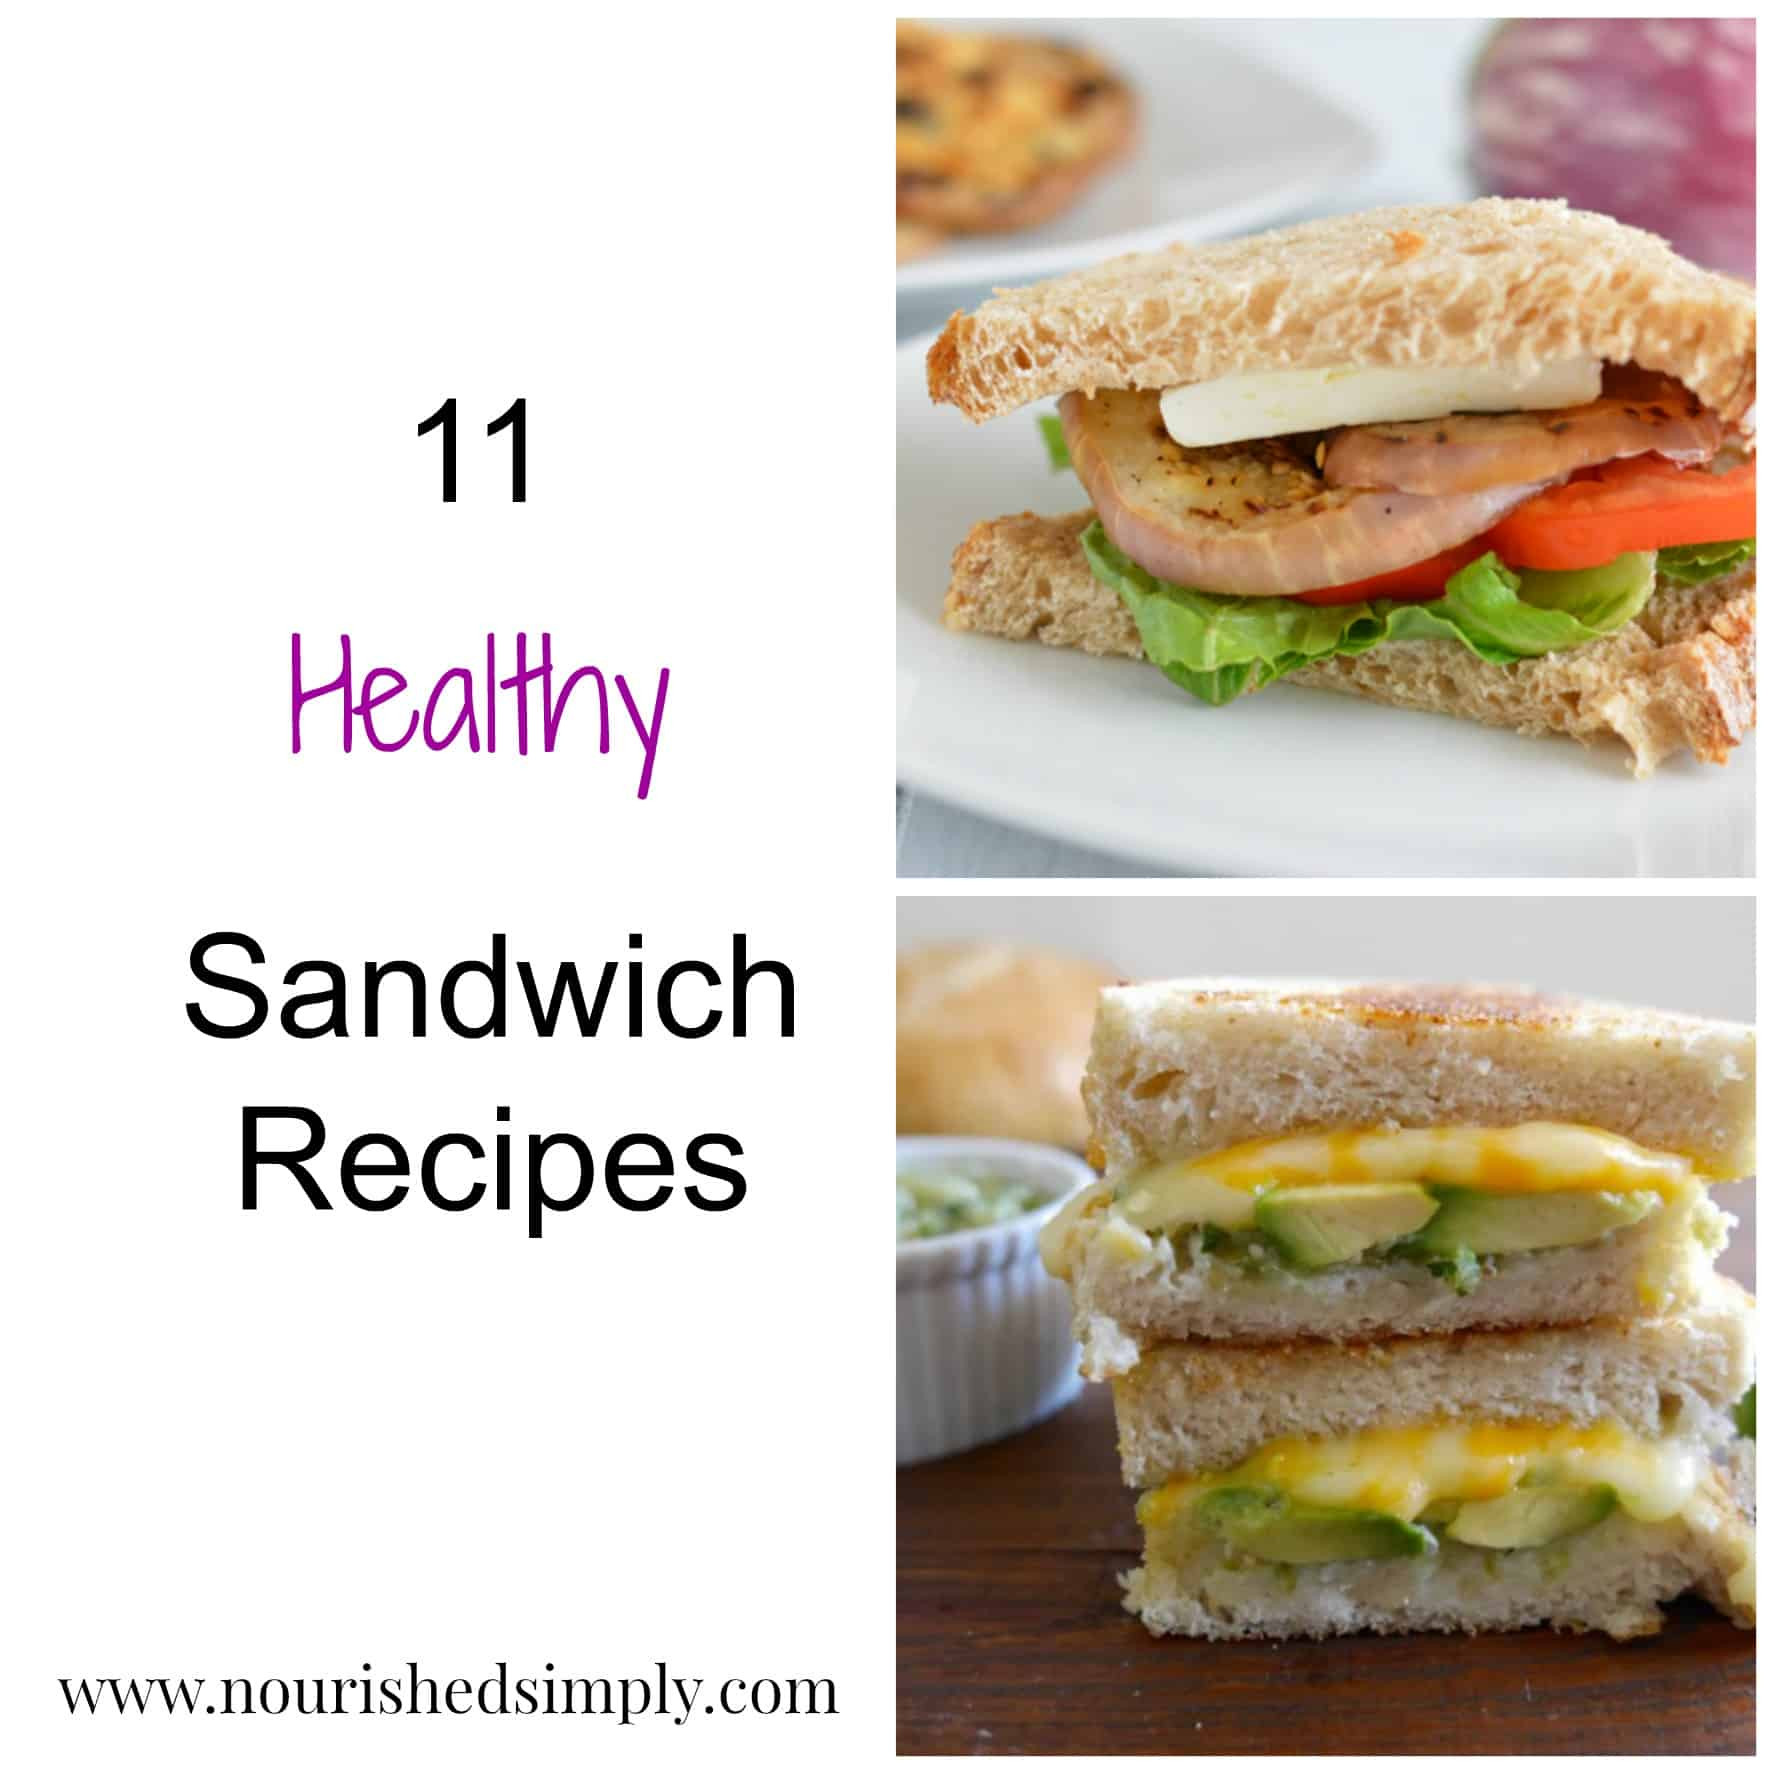 Sandwich Ideas For Dinner
 11 Healthy Sandwich Recipes Monday Meal Ideas